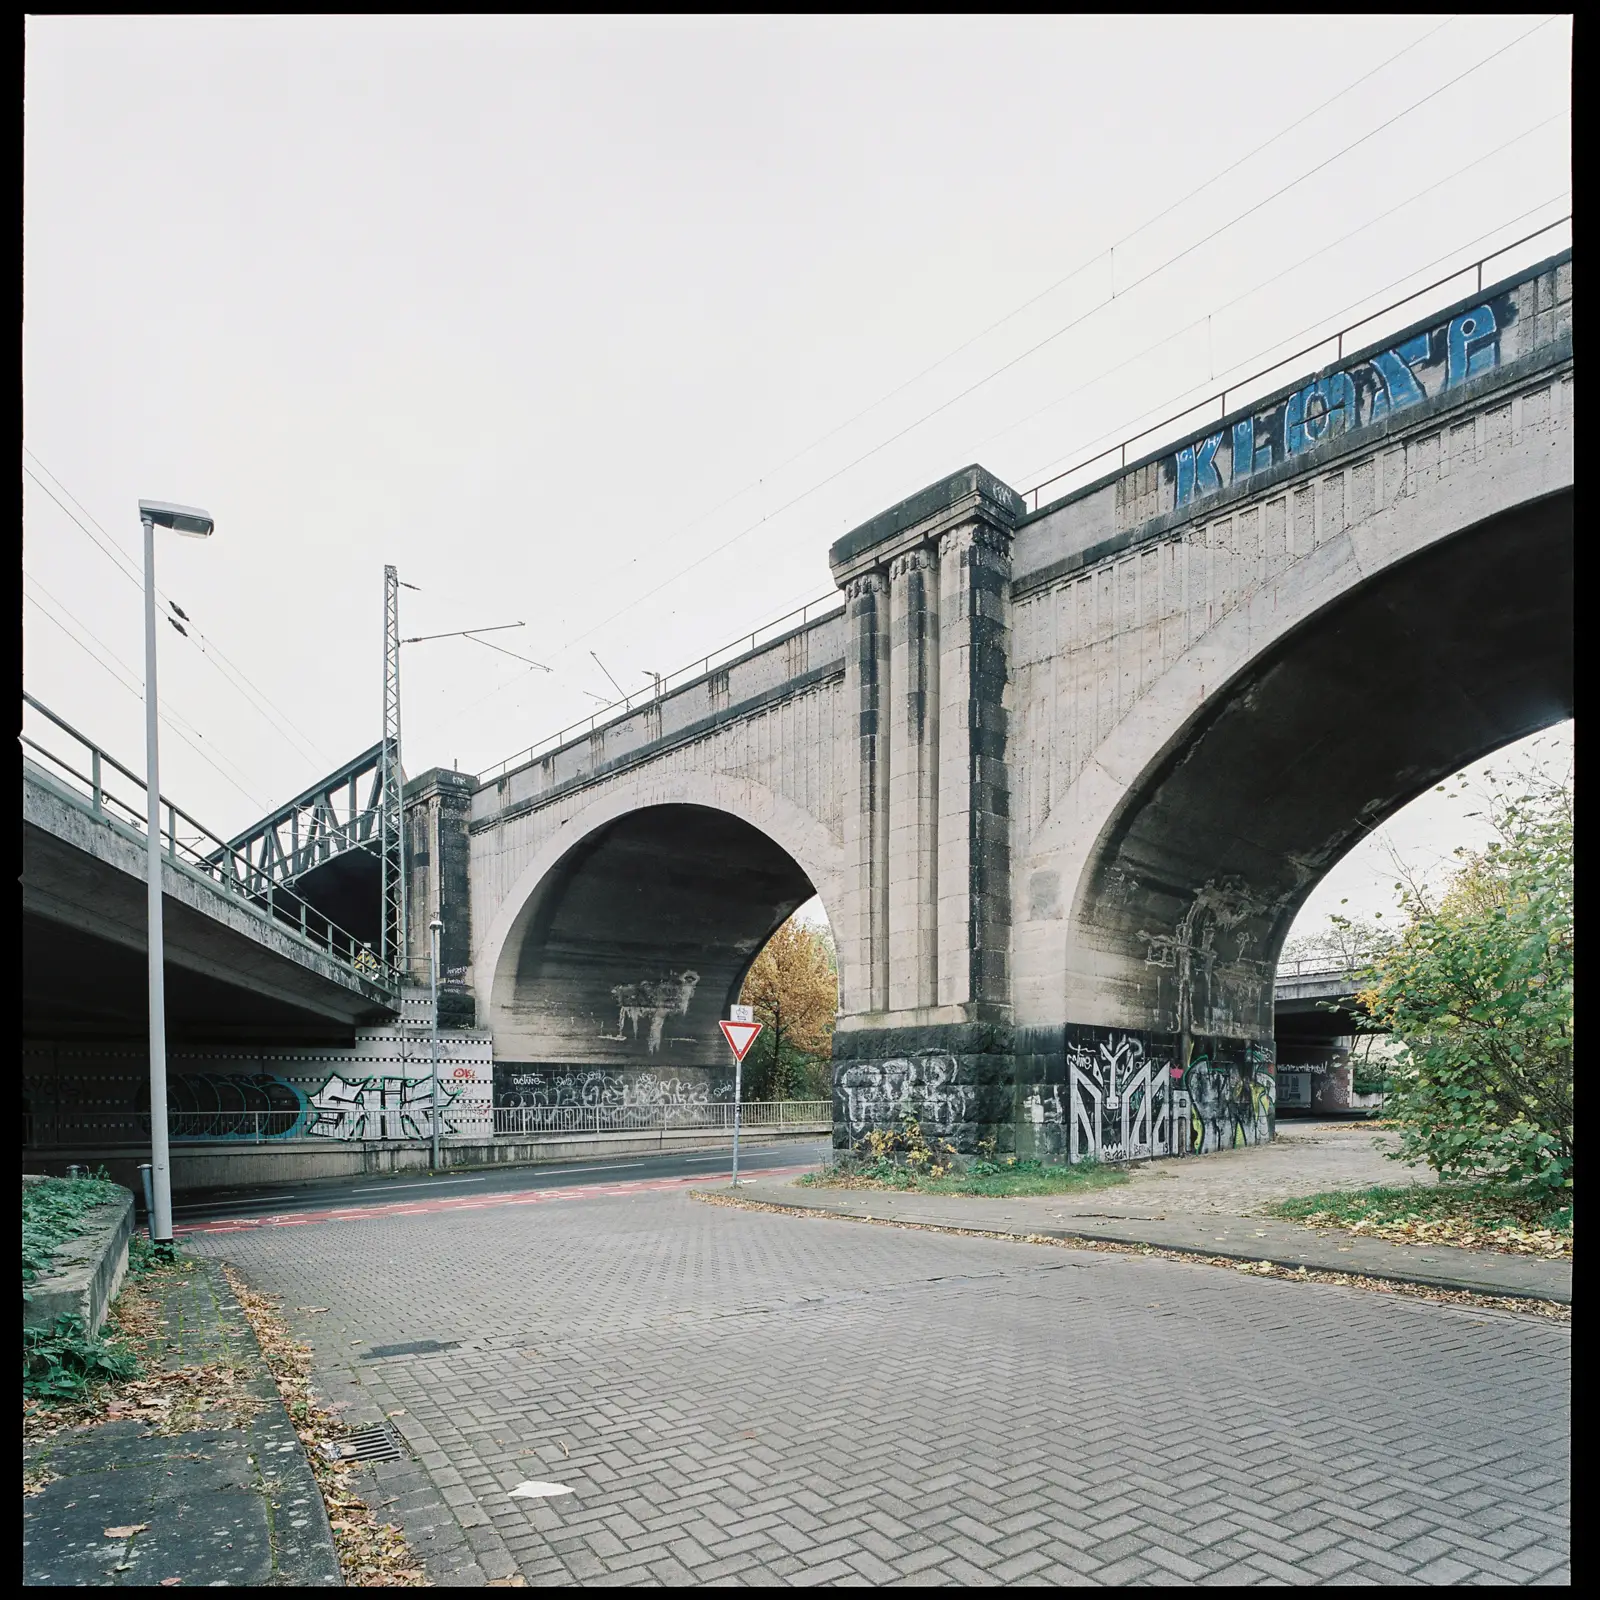 6x6 photograph of a monumental railroad bridge; the bridge's concrete appears quite run-down